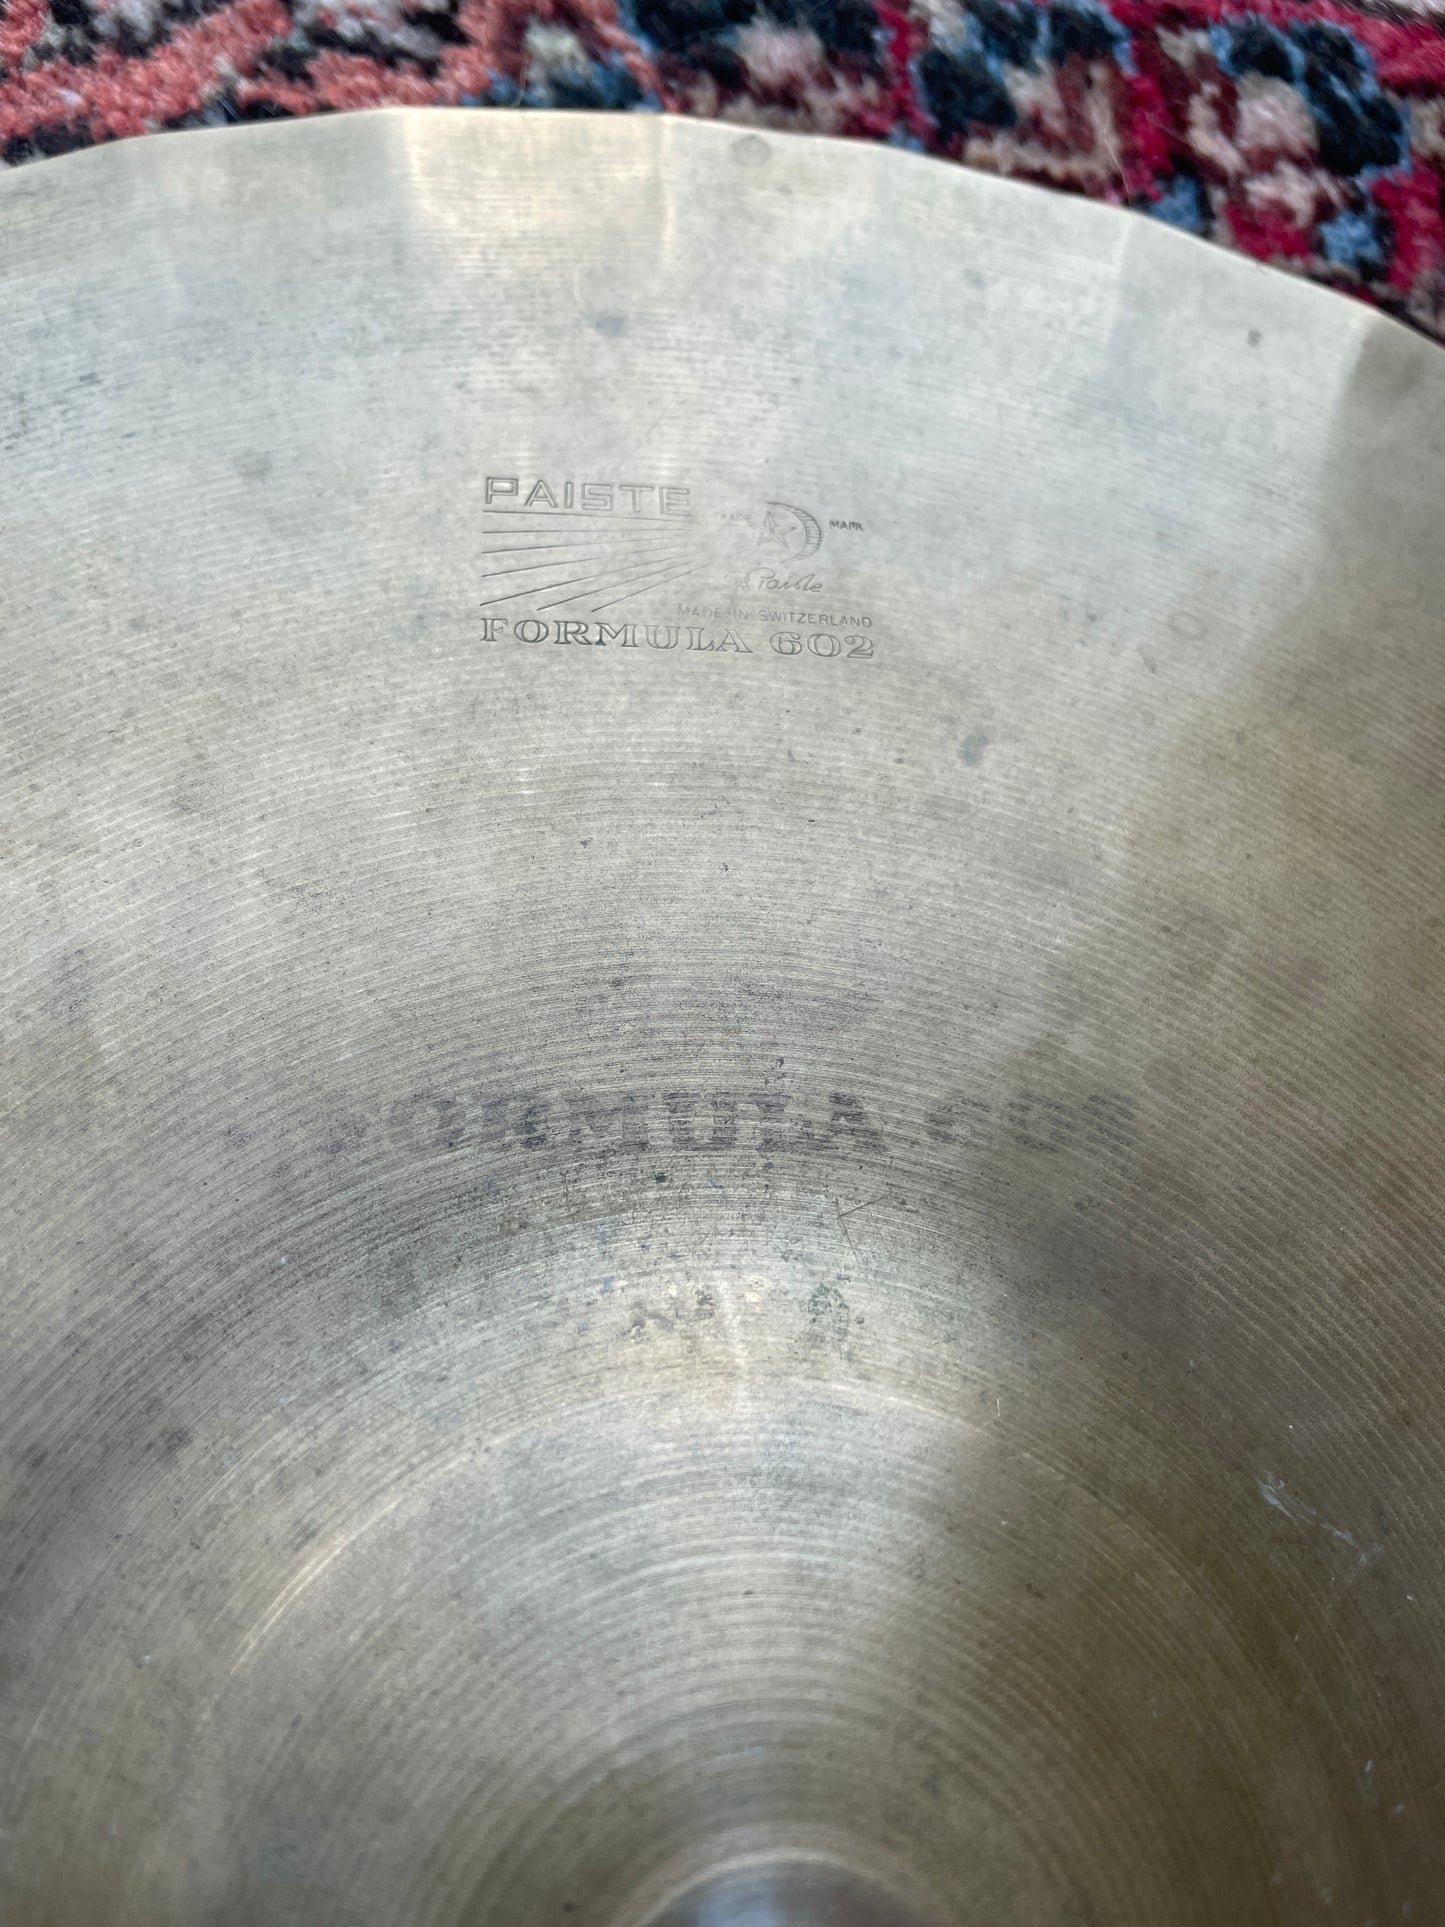 15" Vintage Paiste Pre-serial # Formula 602 Sound Edge Hi-Hat Cymbal Pair 1124g/1250g #95 *Video Demo*